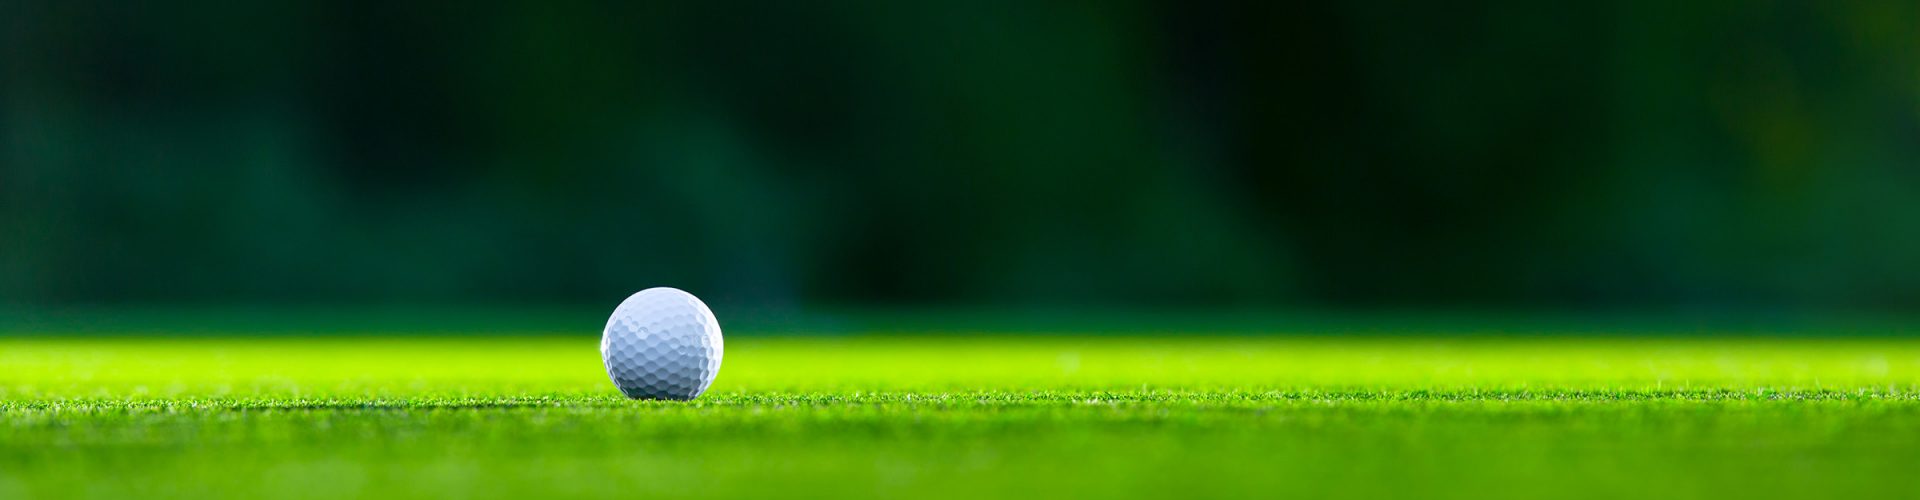 A golf ball sitting on a green